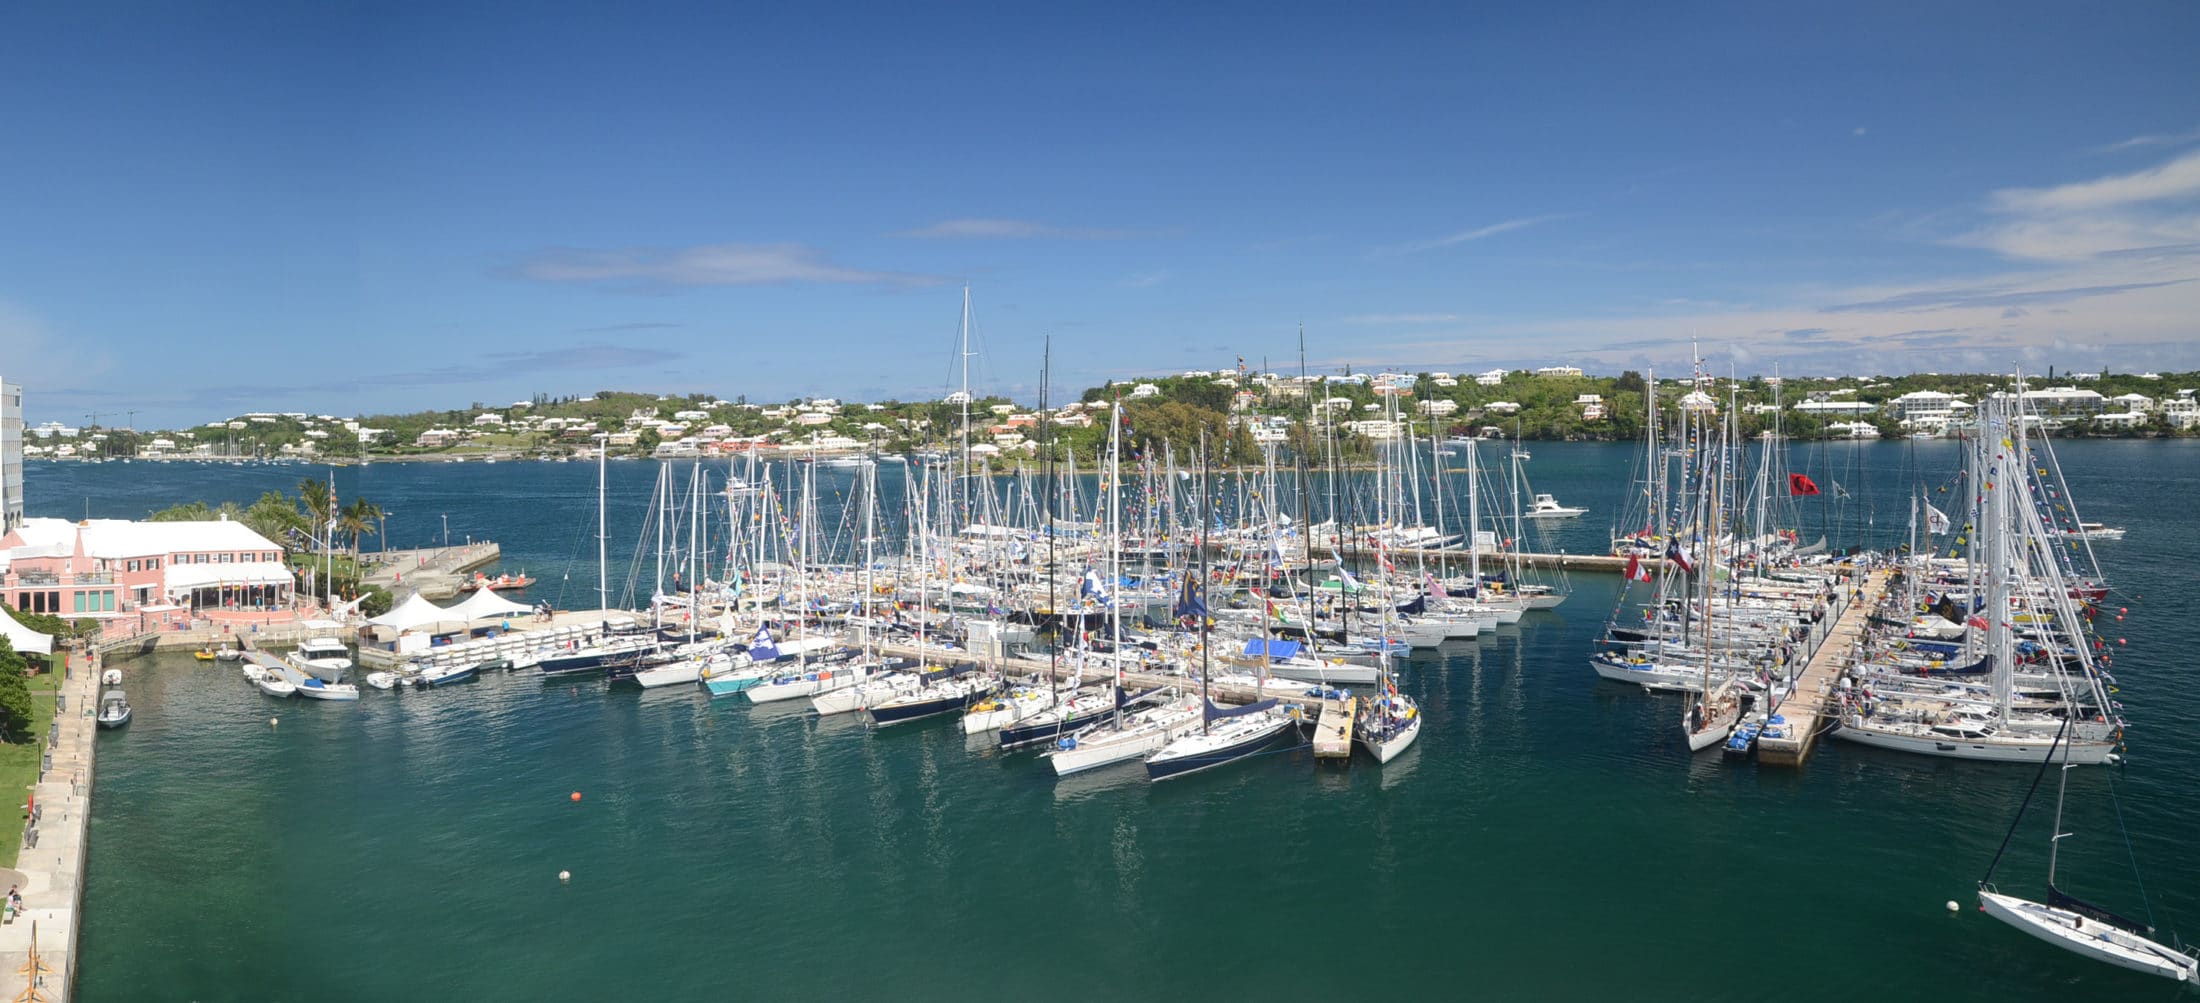 Royal Bermuda Yacht Club and docks